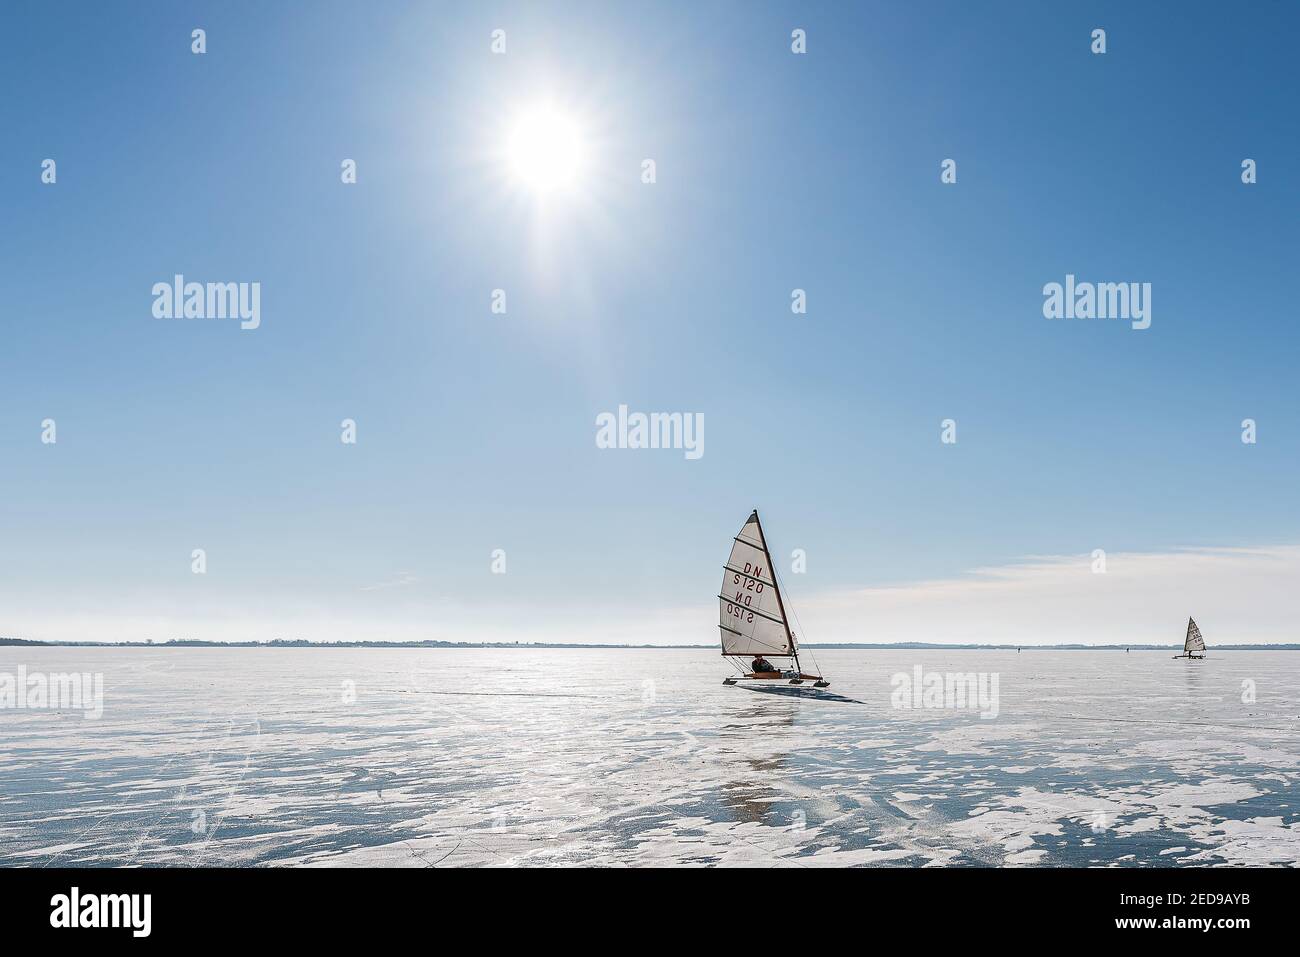 ice-boat in the sunshine on the frozen lake, Arreso, Denmark, February 14, 2021 Stock Photo